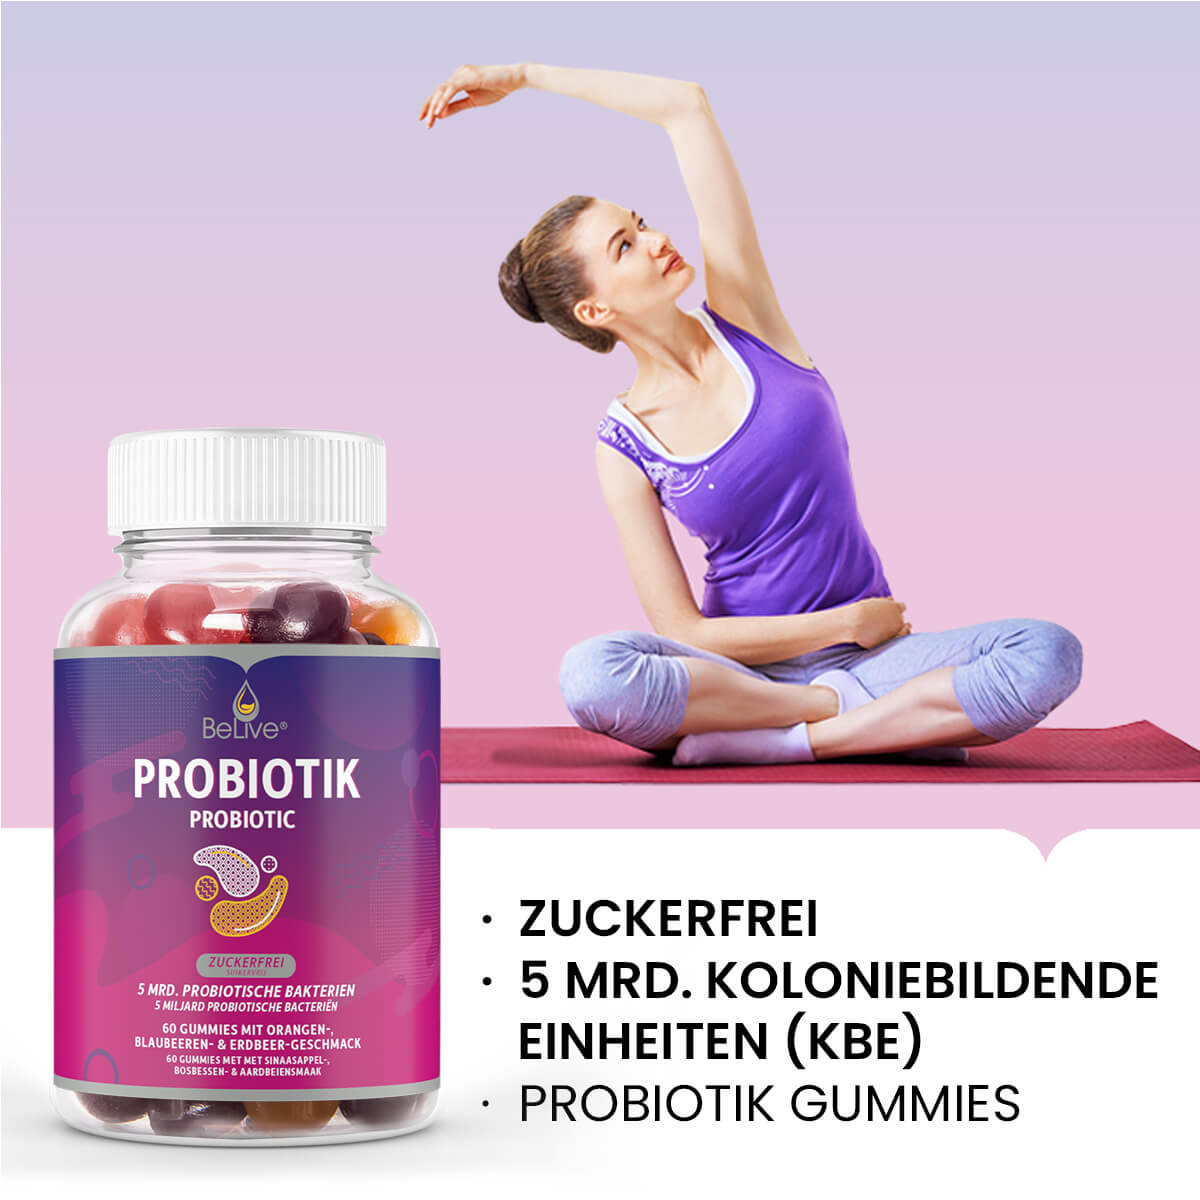 a798-belive-probiotics-05-1200px